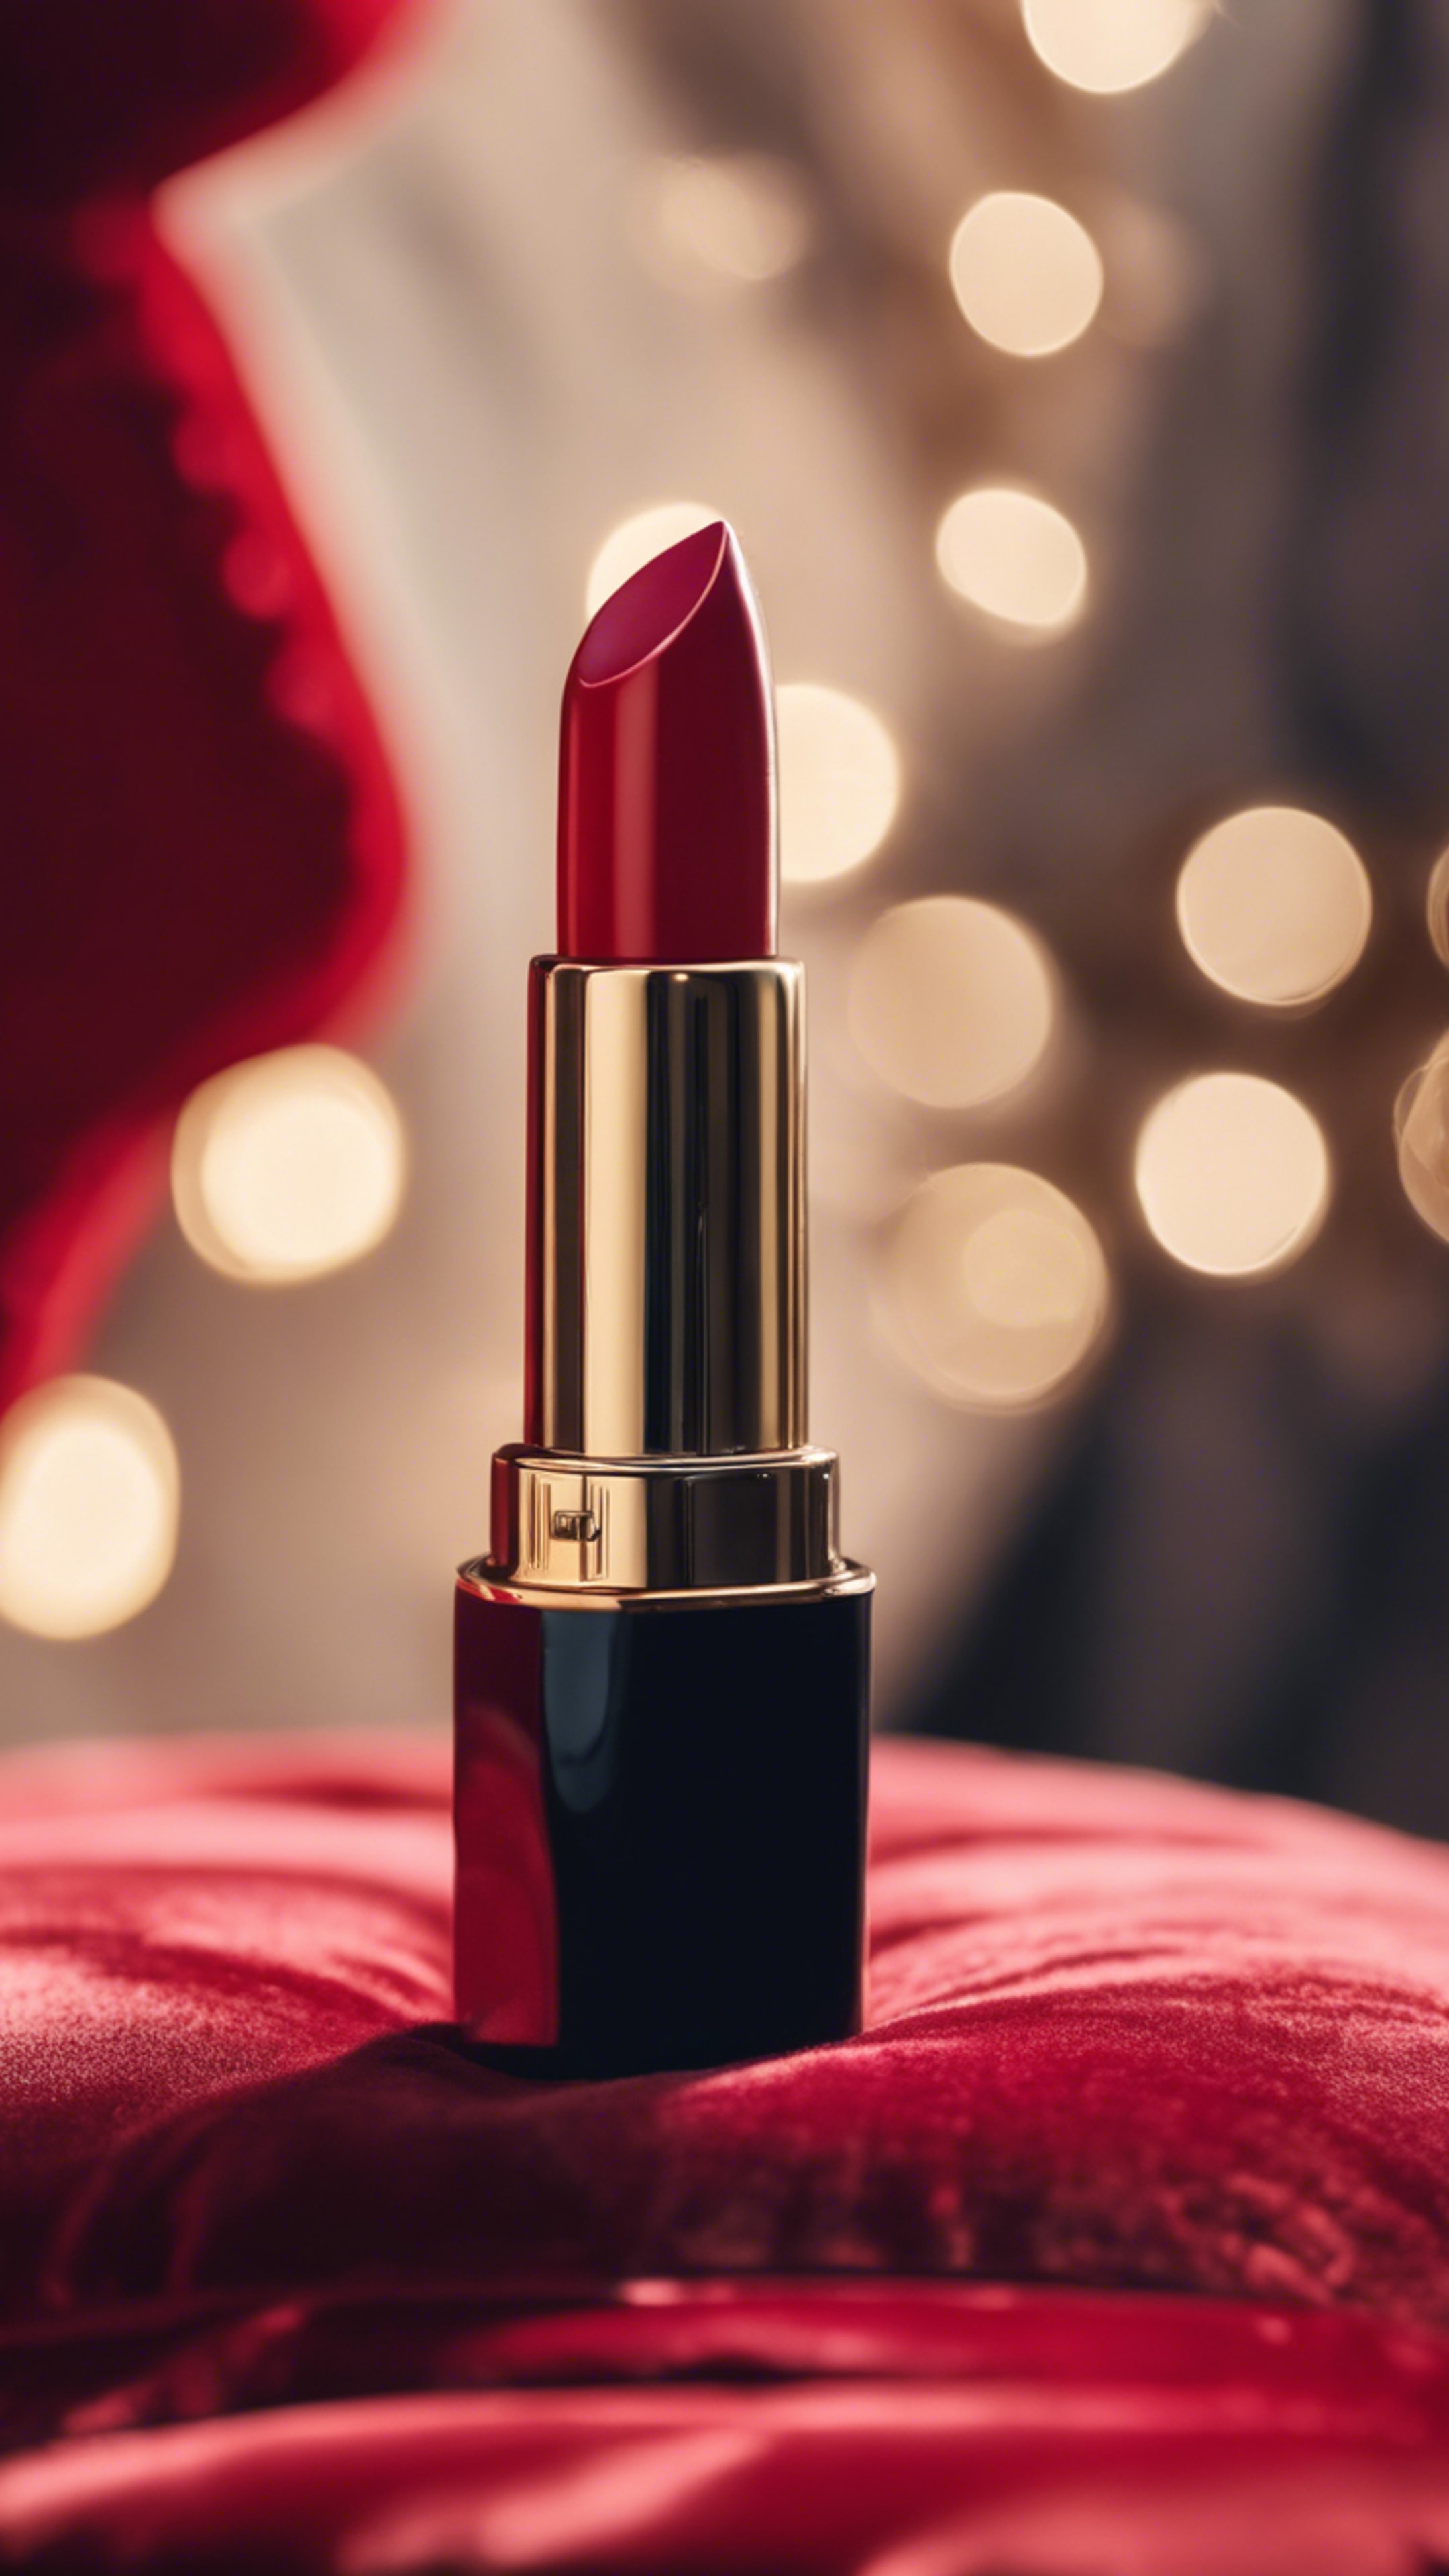 A luxury red lipstick displayed on a plush velvet cushion. Tapetai[becb77b7269f4dbdb5b5]